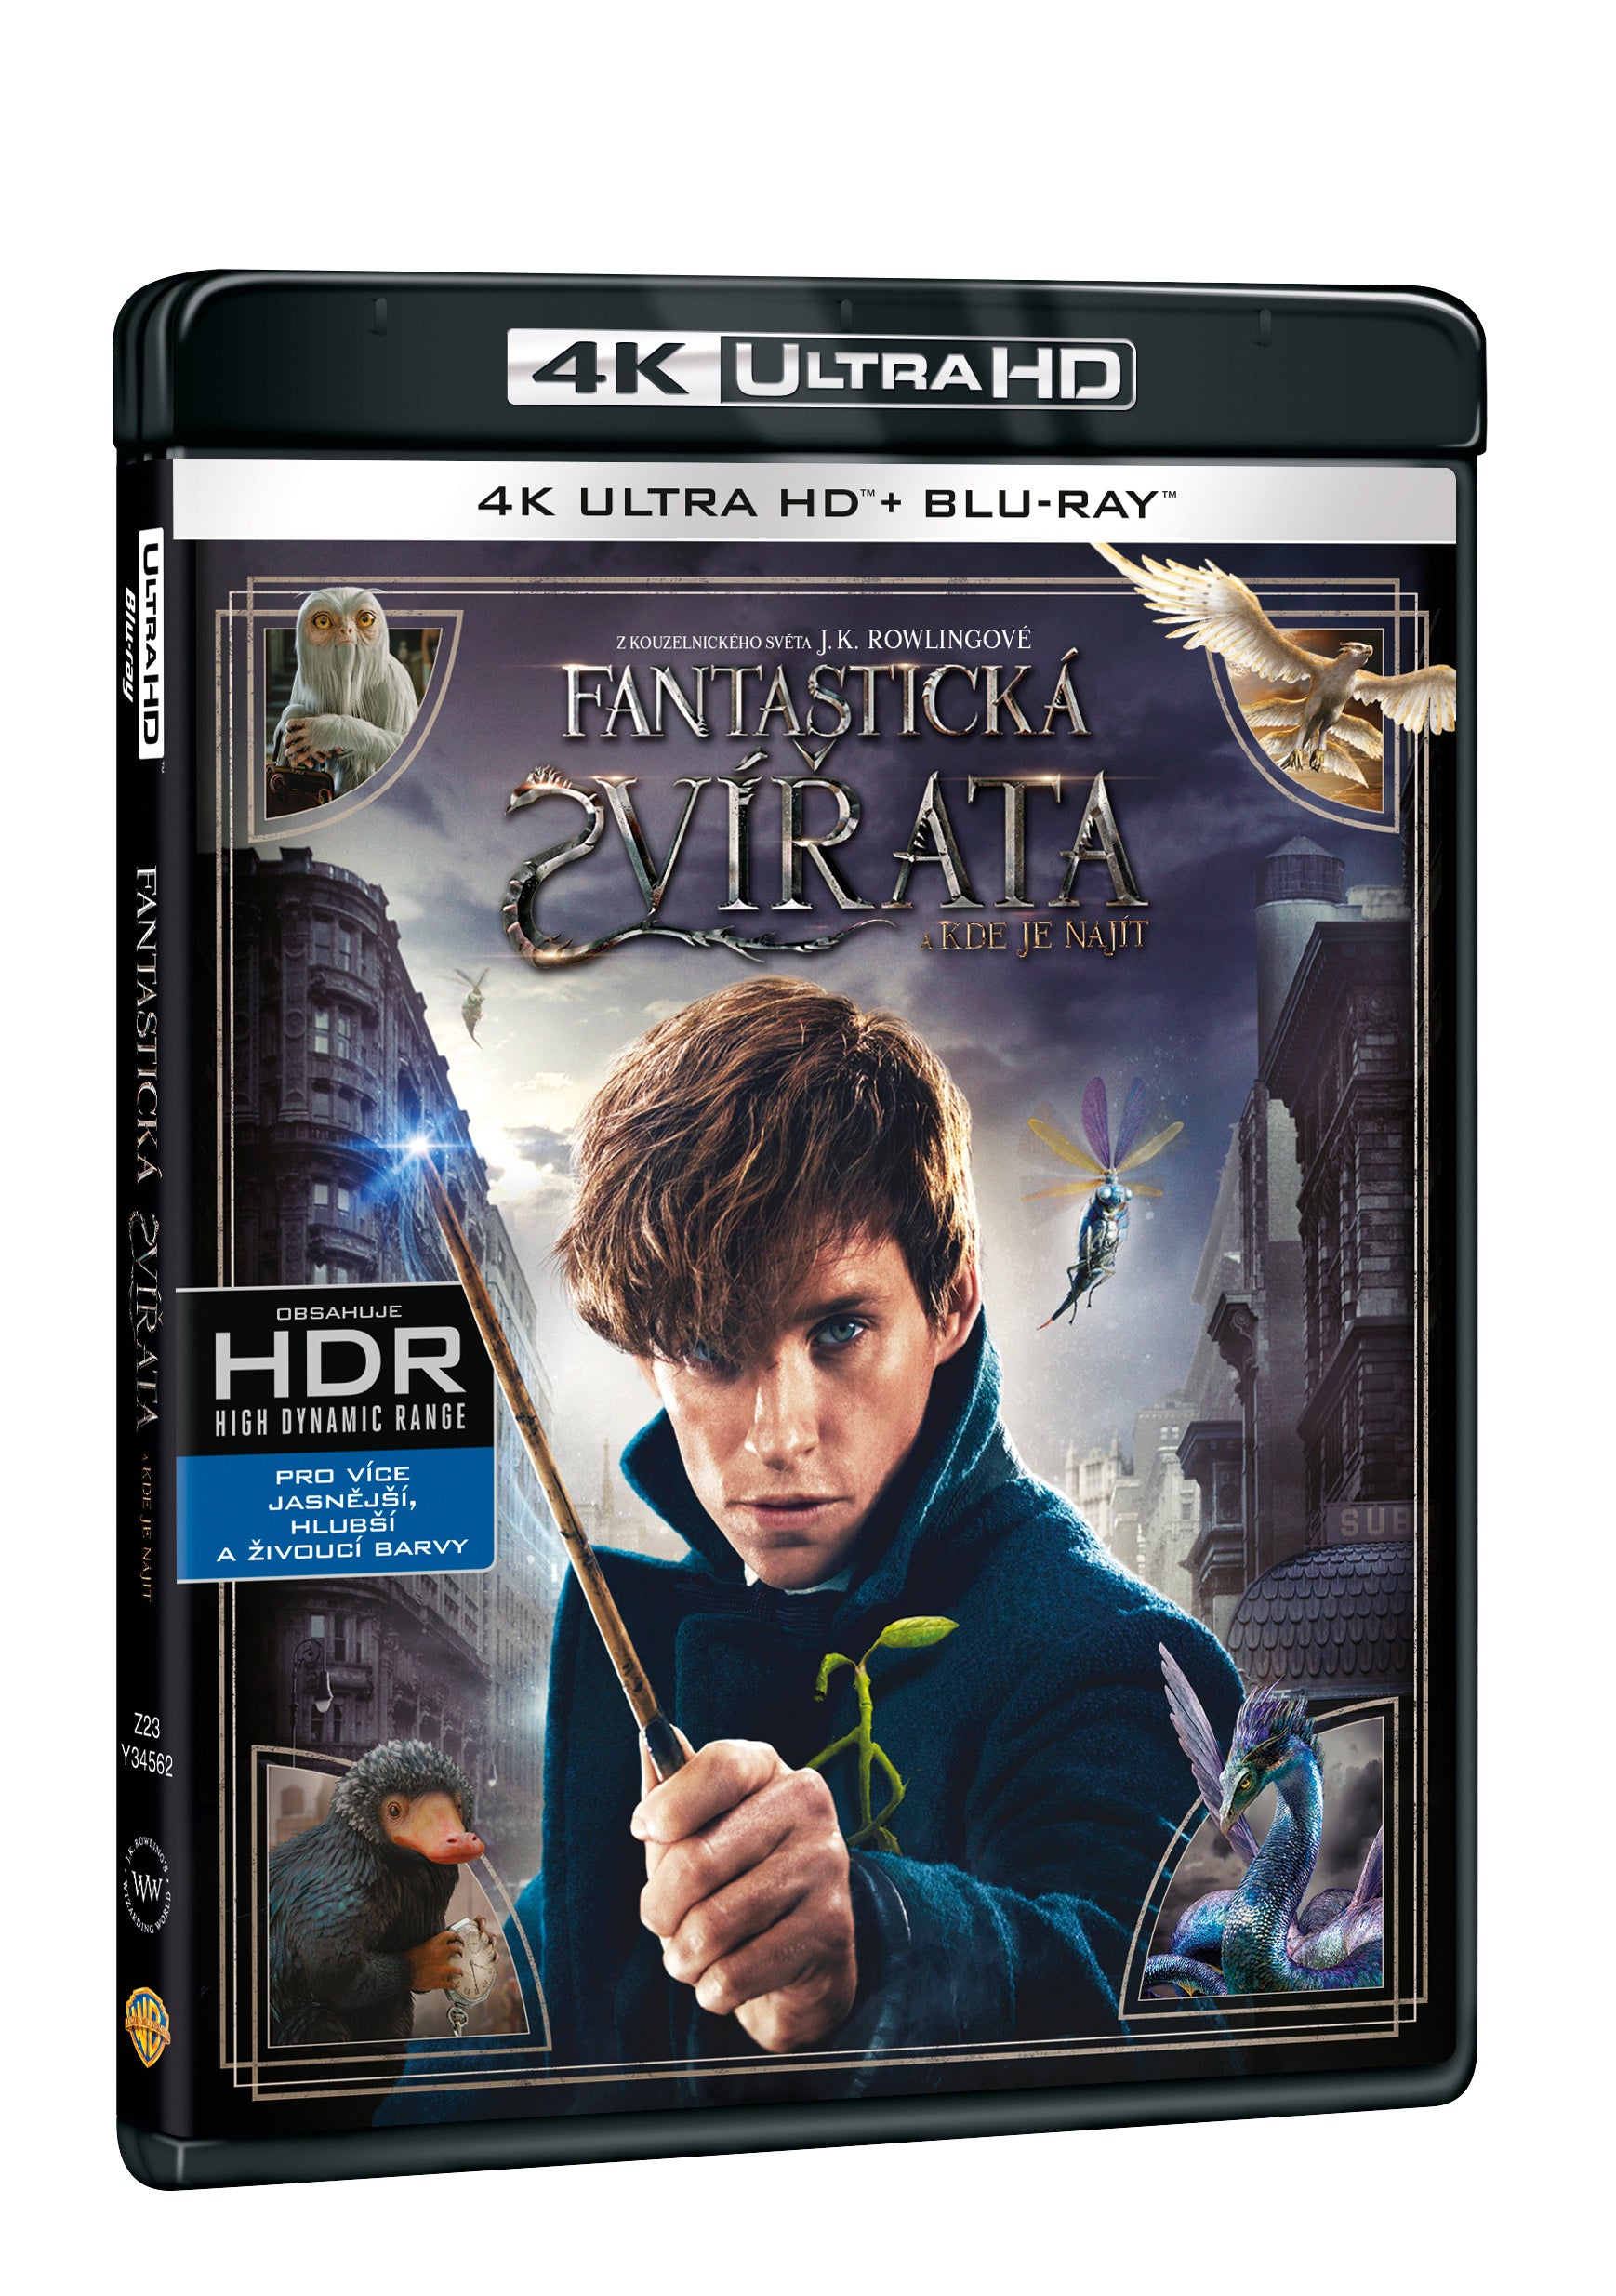 Fantasticka zvirata a kde je najit 2BD (UHD+BD) / Fantastic Beasts and where to find them - Czech version